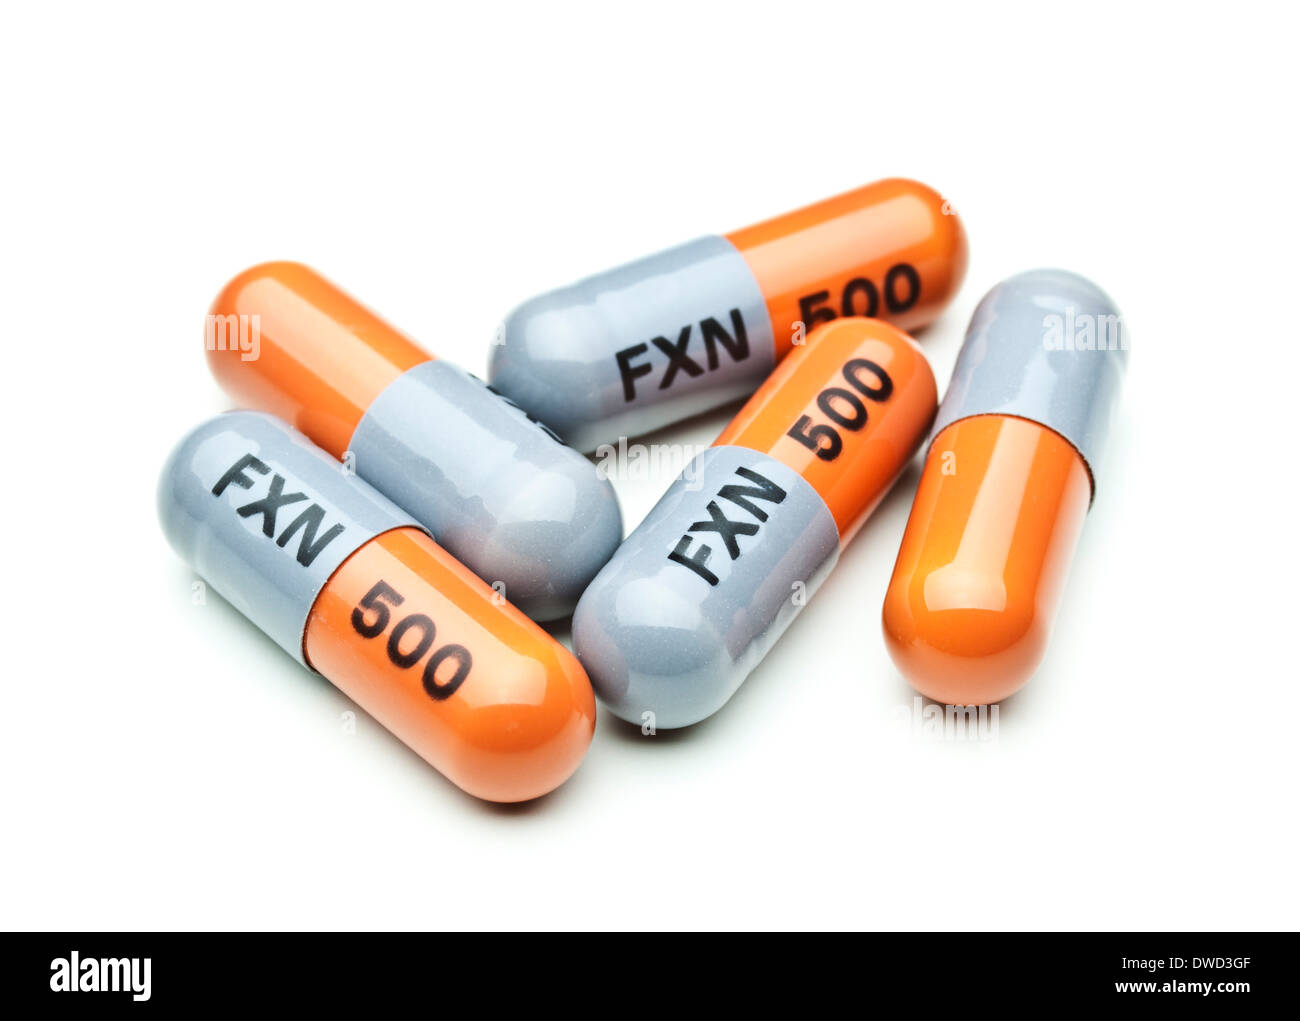 Flucloxacillin 500mg Capsules Penicillin Antibiotics Tablets Stock Photo